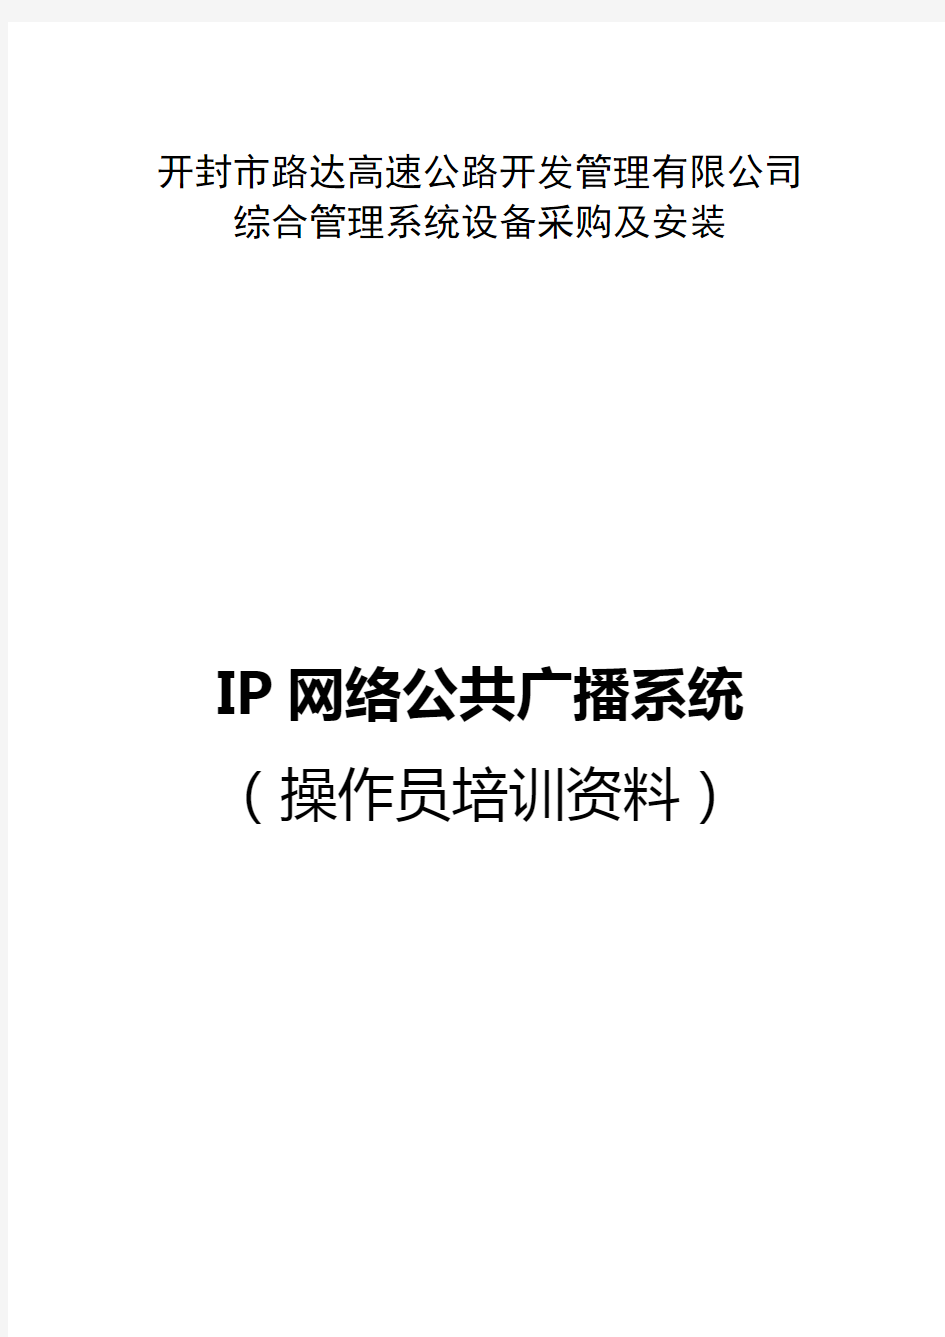 IP网络广播用户手册_V3.0.6